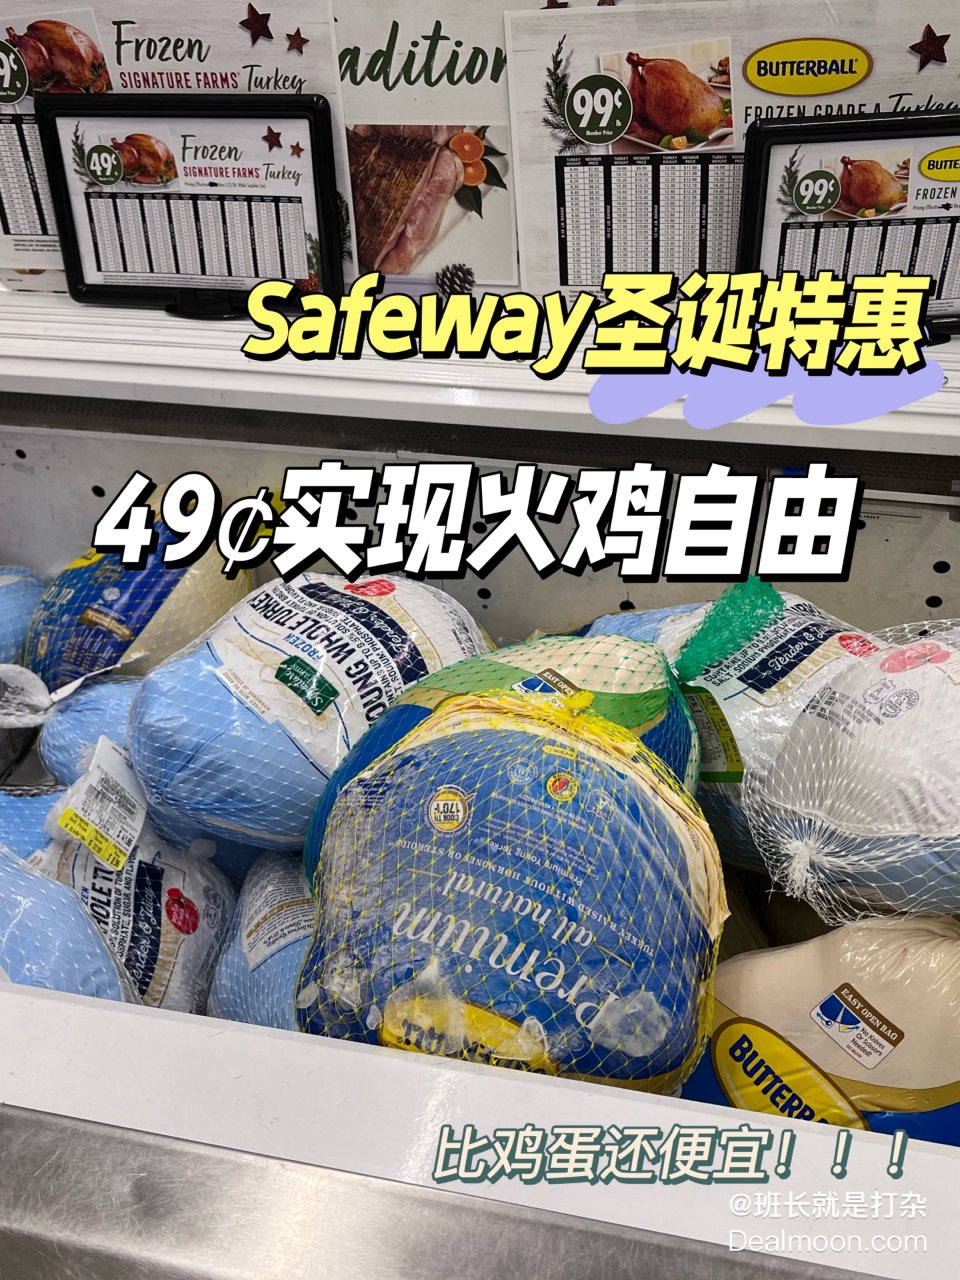 Safeway 49¢实现火鸡自由🦃...